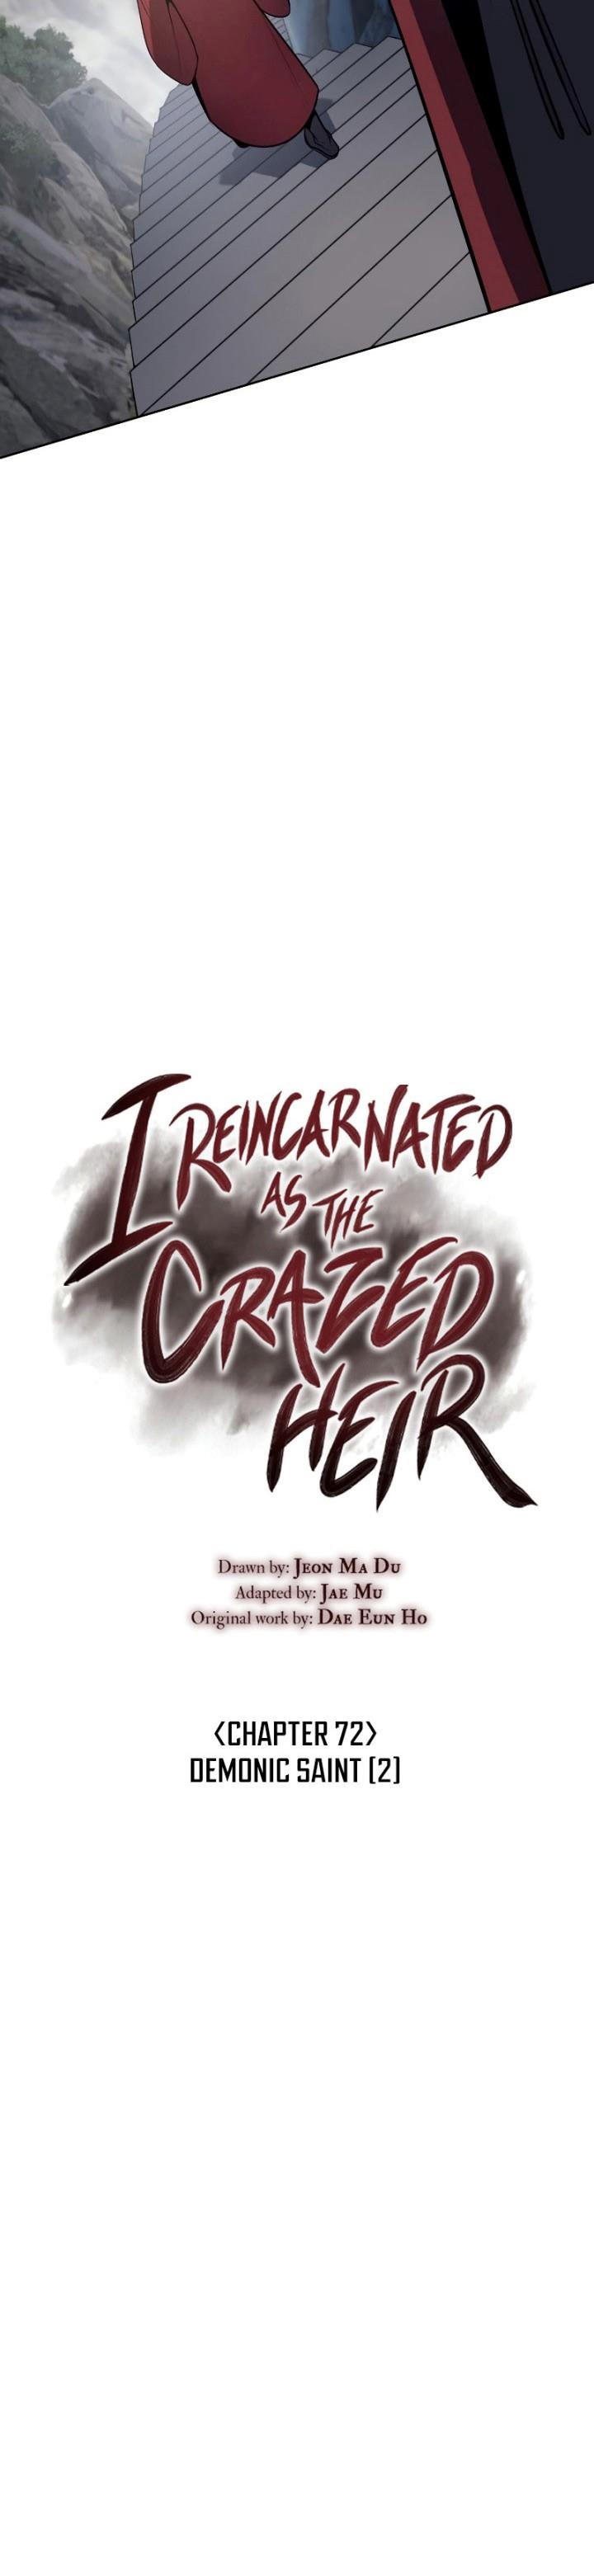 I Reincarnated As The Crazed Heir Chapter 72